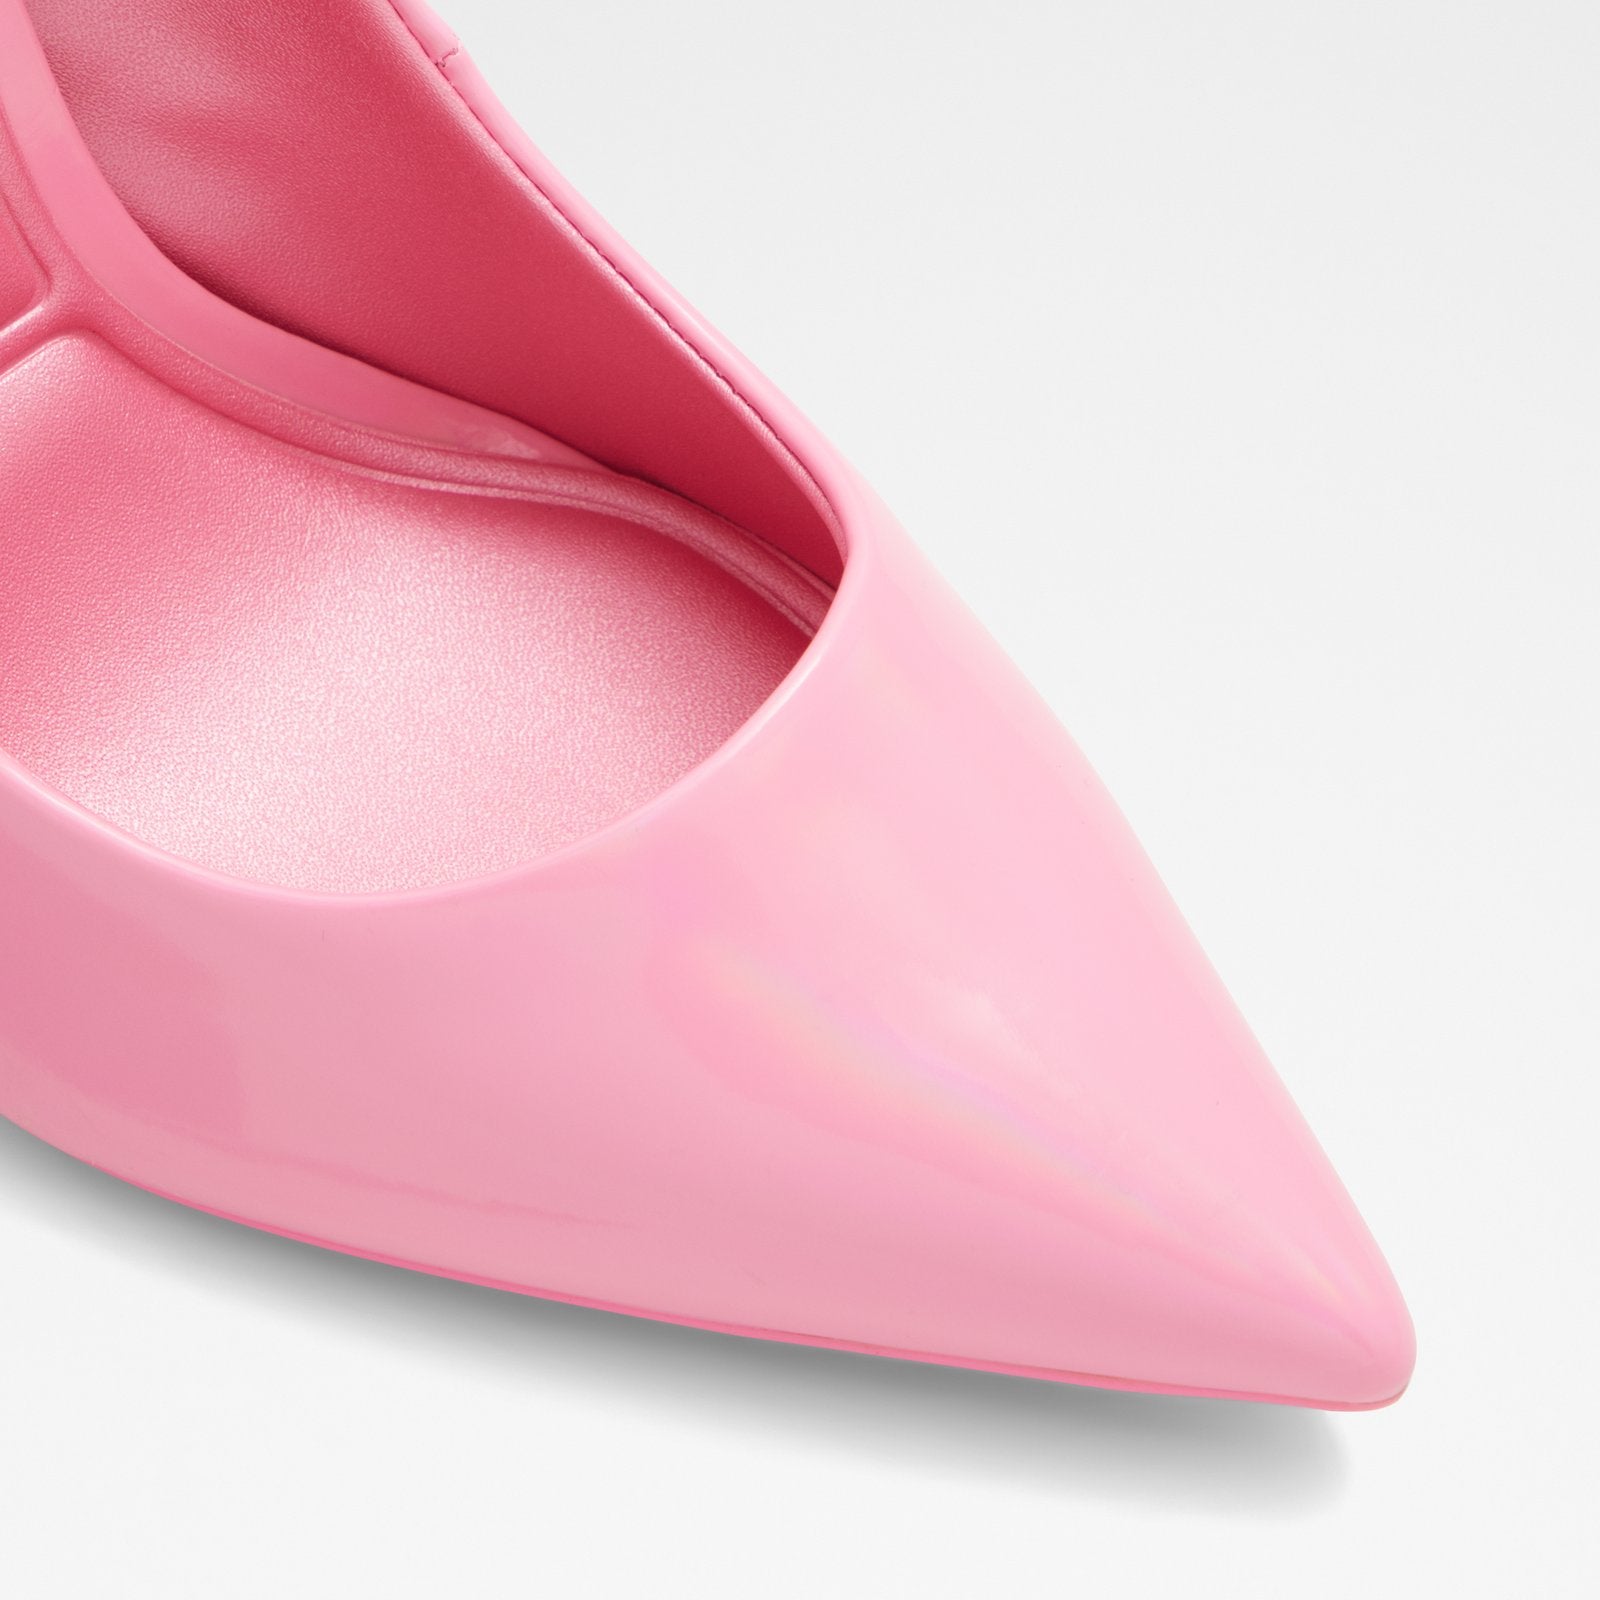 Stessy2.0 <Br> Heeled / Heeled Women Shoes - Medium Pink - ALDO KSA